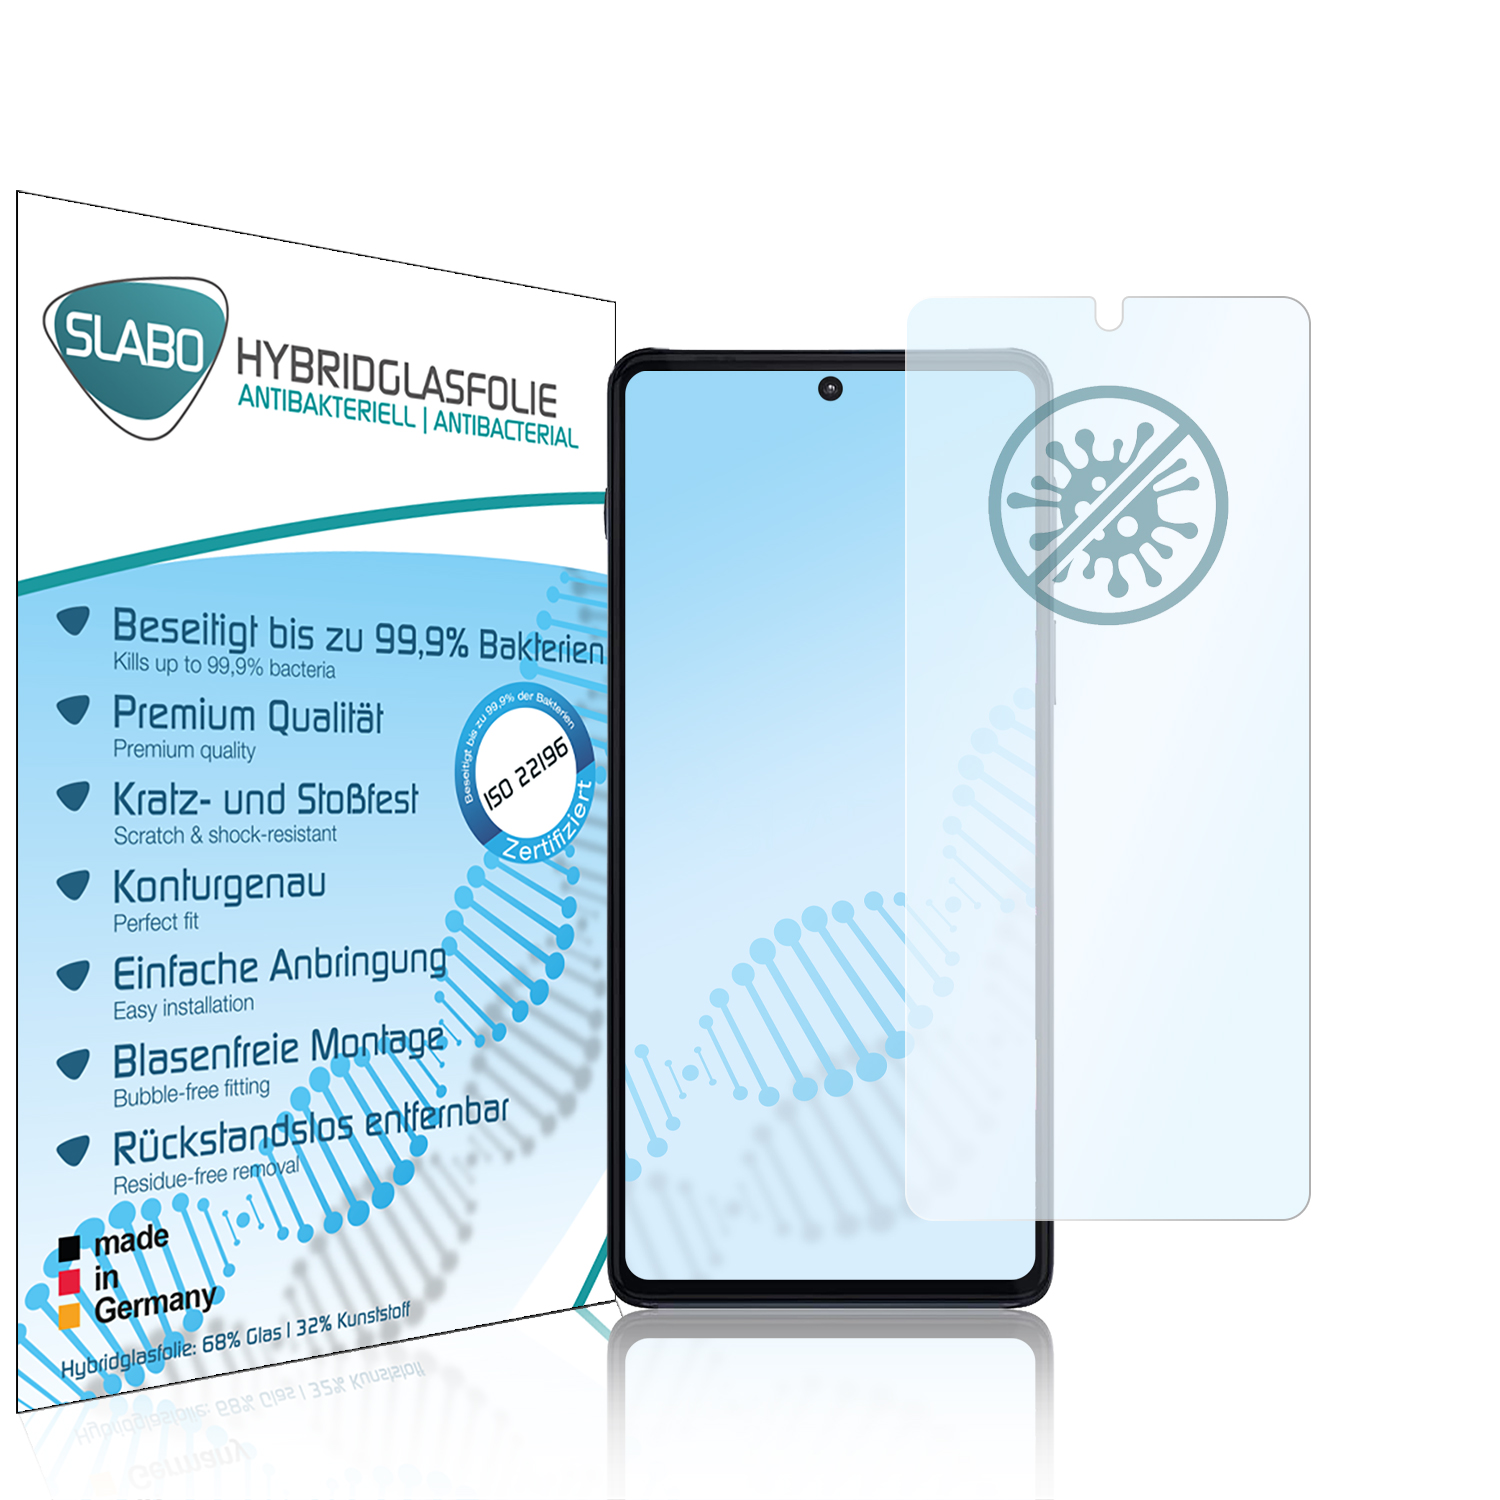 SLABO antibakteriell flexibles edge Displayschutz(für Motorola | 20 PRO) Hybridglas 20 edge